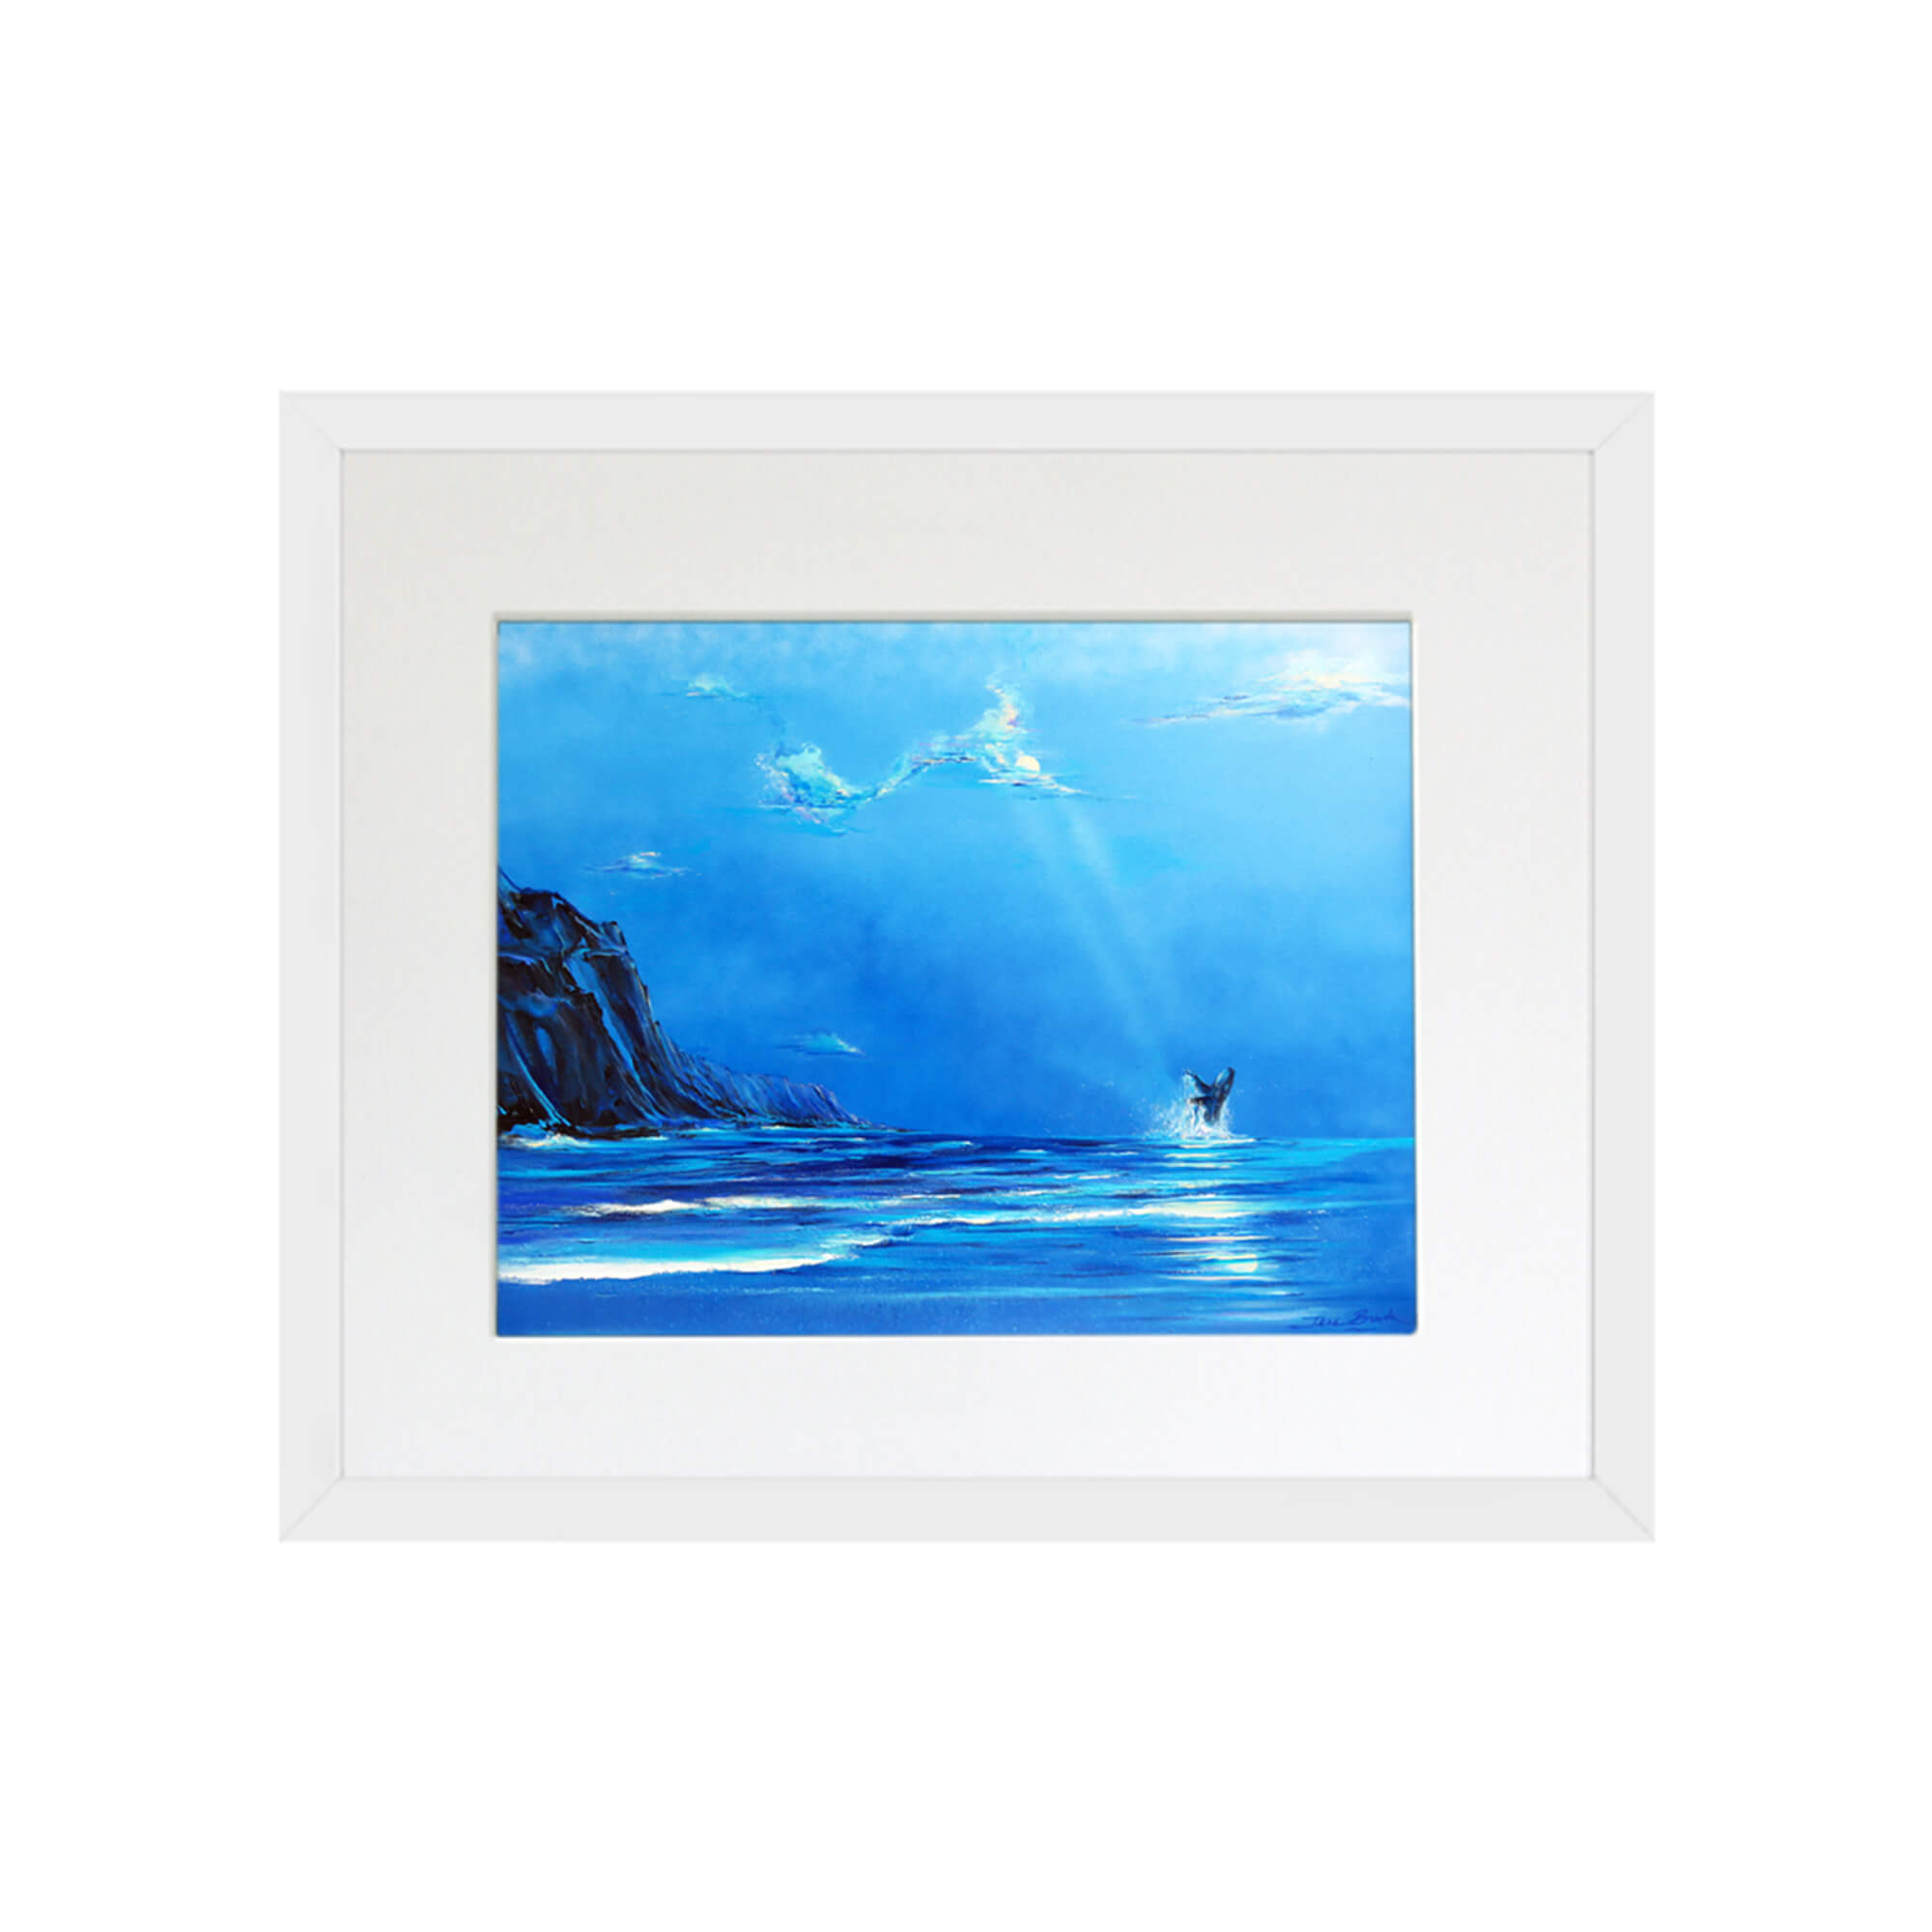 A seascape with a whale by Hawaii artist Jess Burda